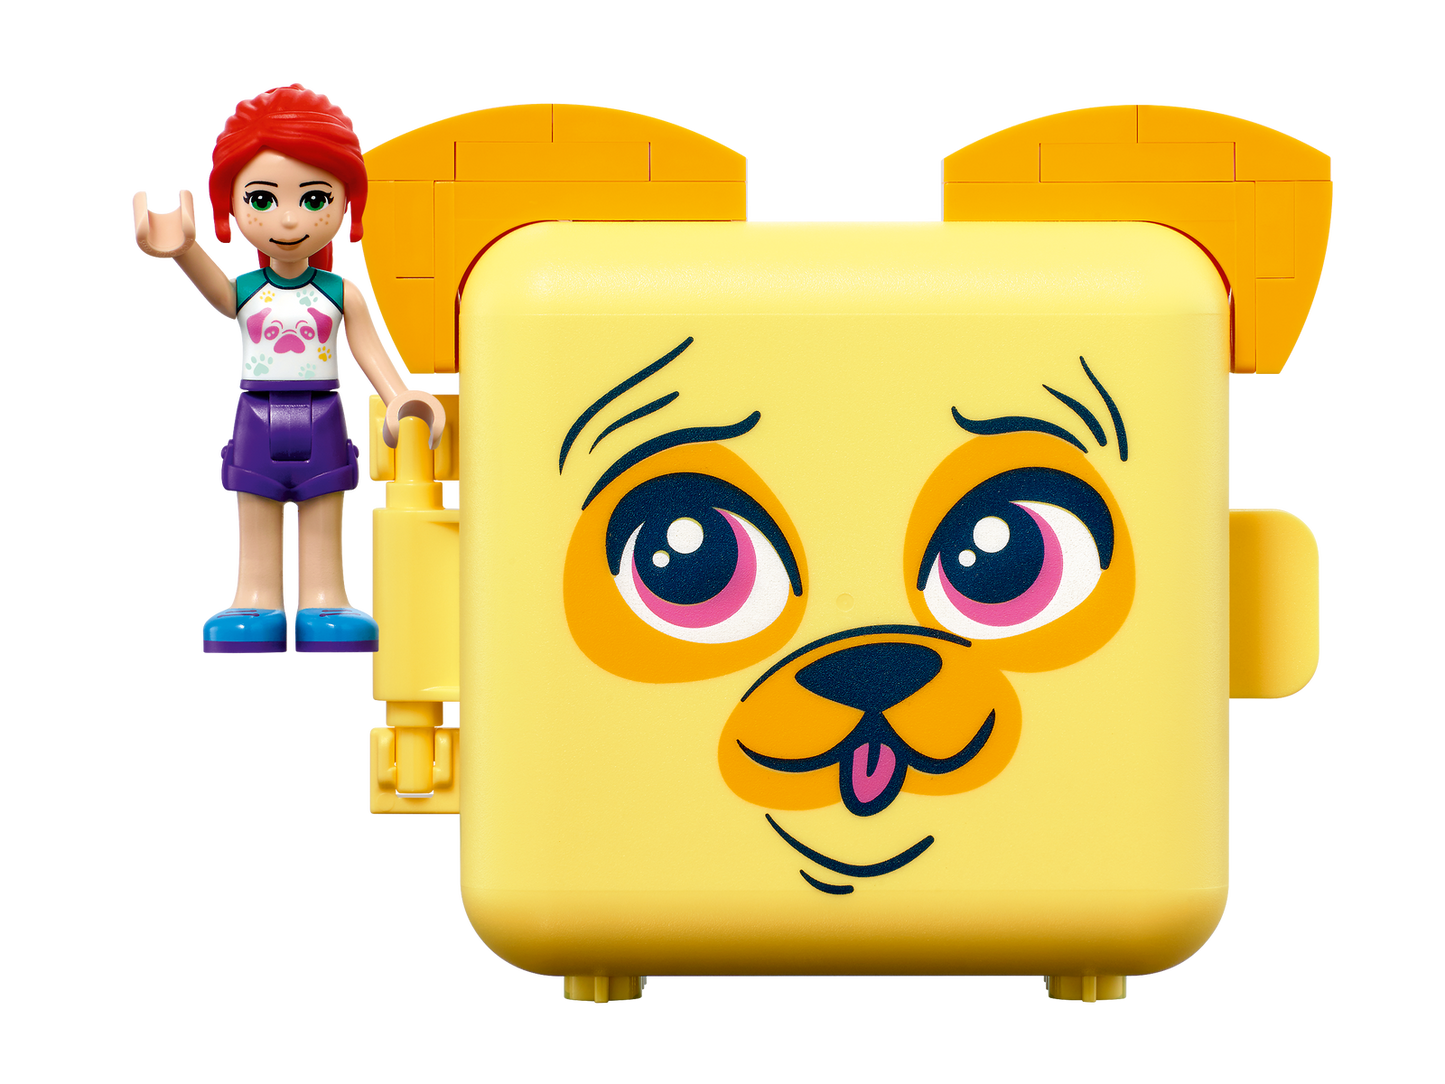 LEGO Friends Mia's Pug Cube 41664